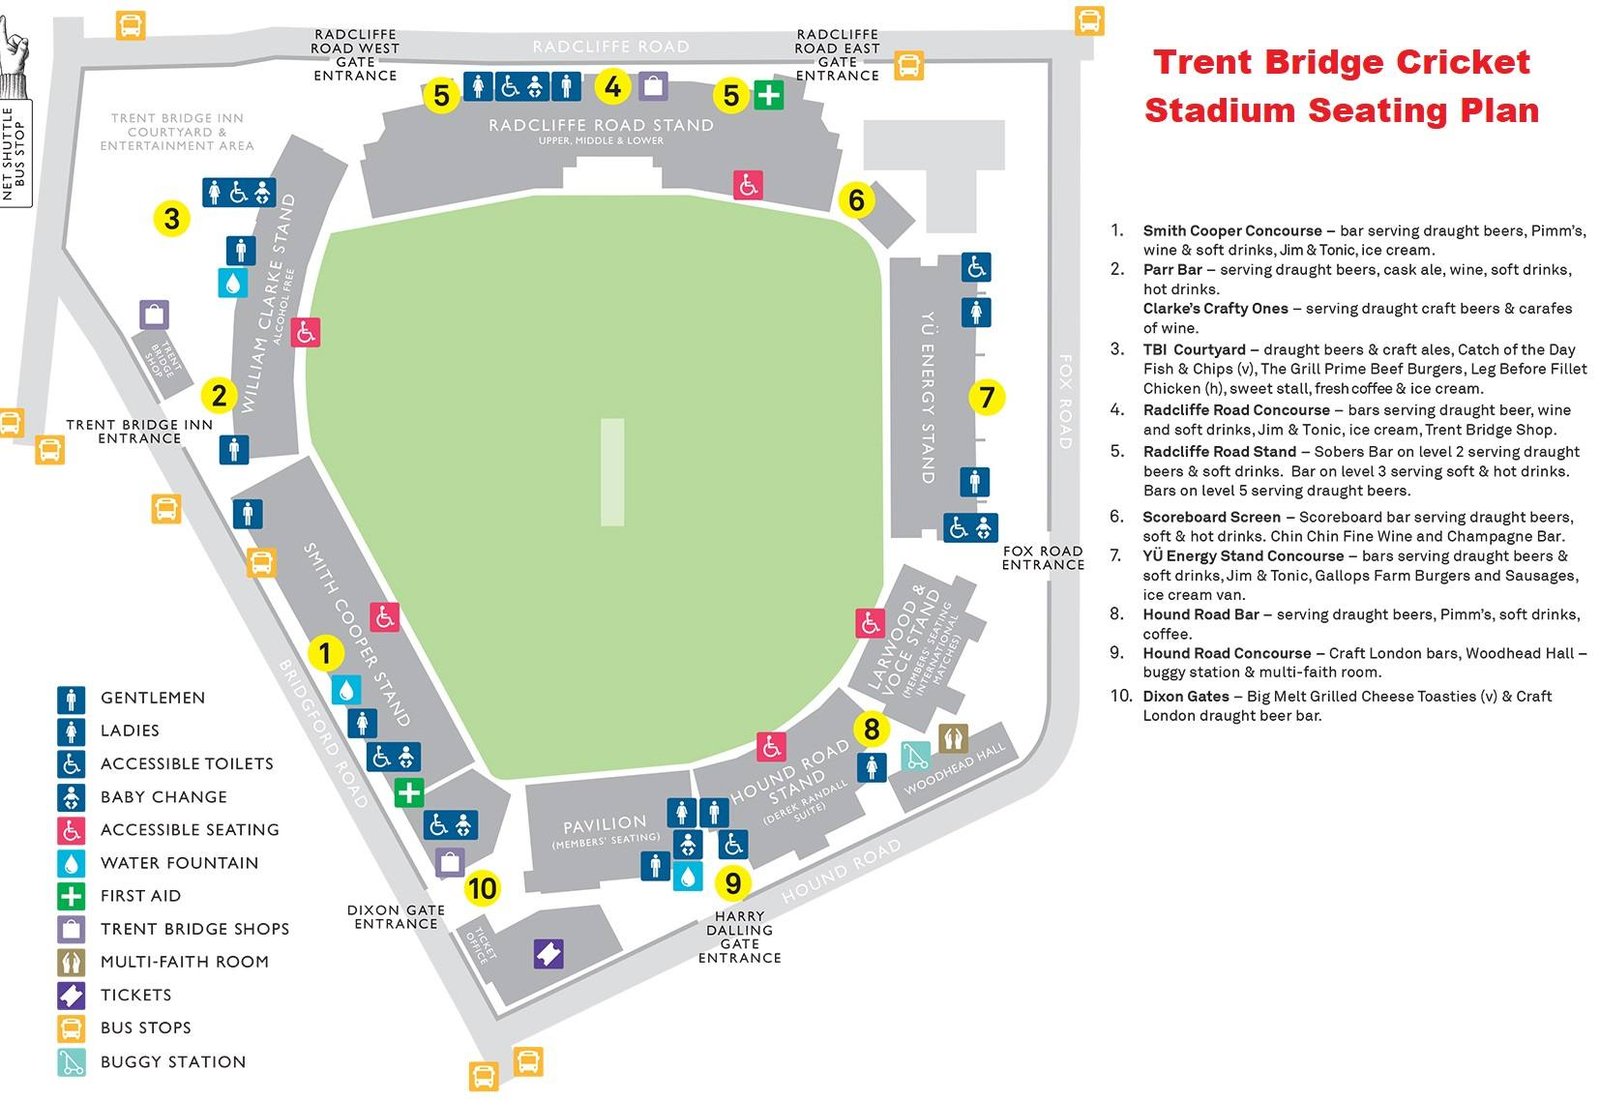 Nottingham Trent Bridge Cricket Stadium Seating Plan with Stands